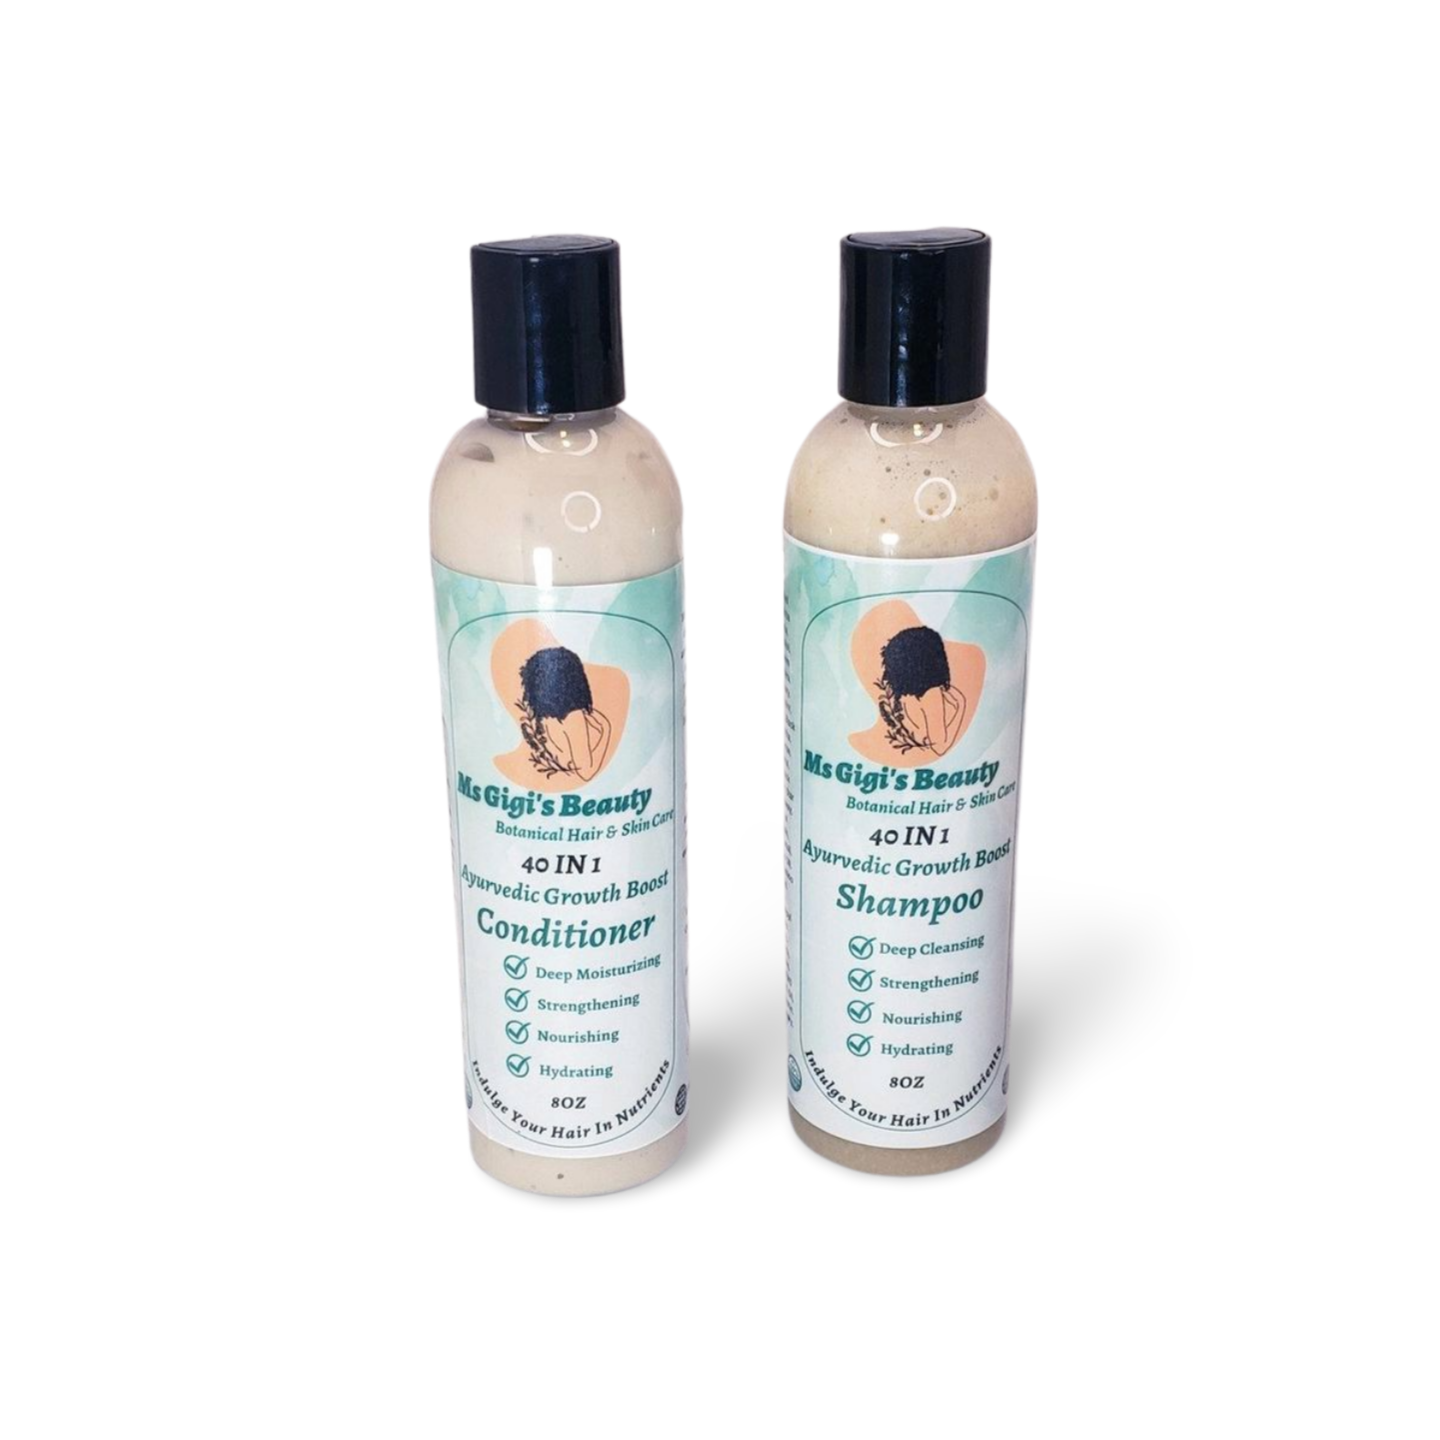 Ayurvedic Shampoo, Ayurvedic Conditioner, Ayurvedic Shampoo & Conditioner, 40 IN 1 Ayurvedic Growth Boost Shampoo & Conditioner